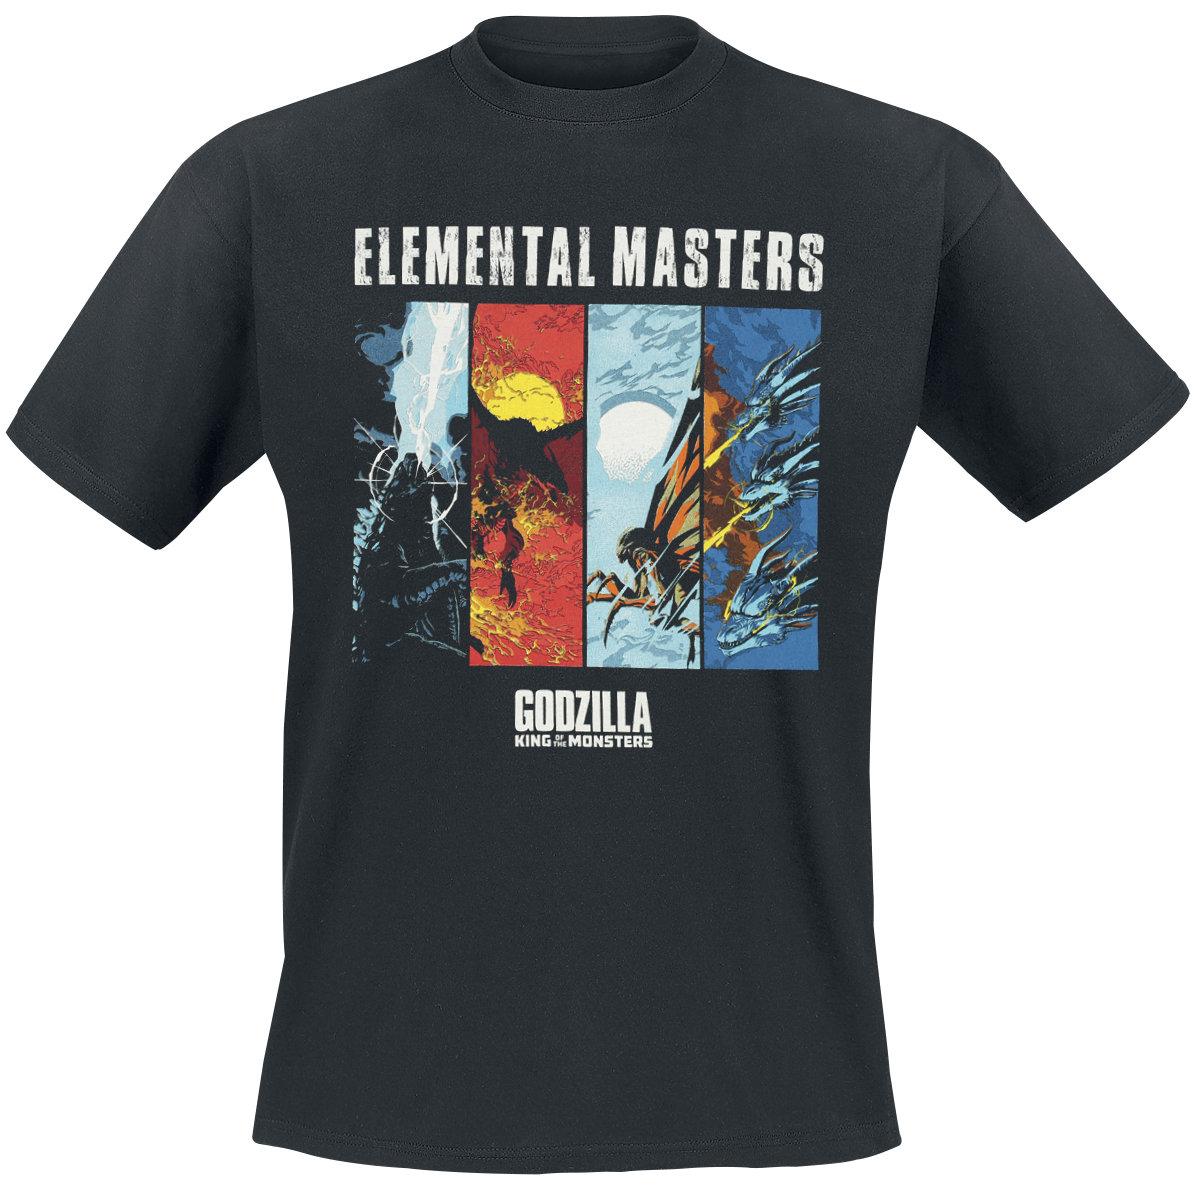 Godzilla - Elemental Masters - T-Shirt - black image